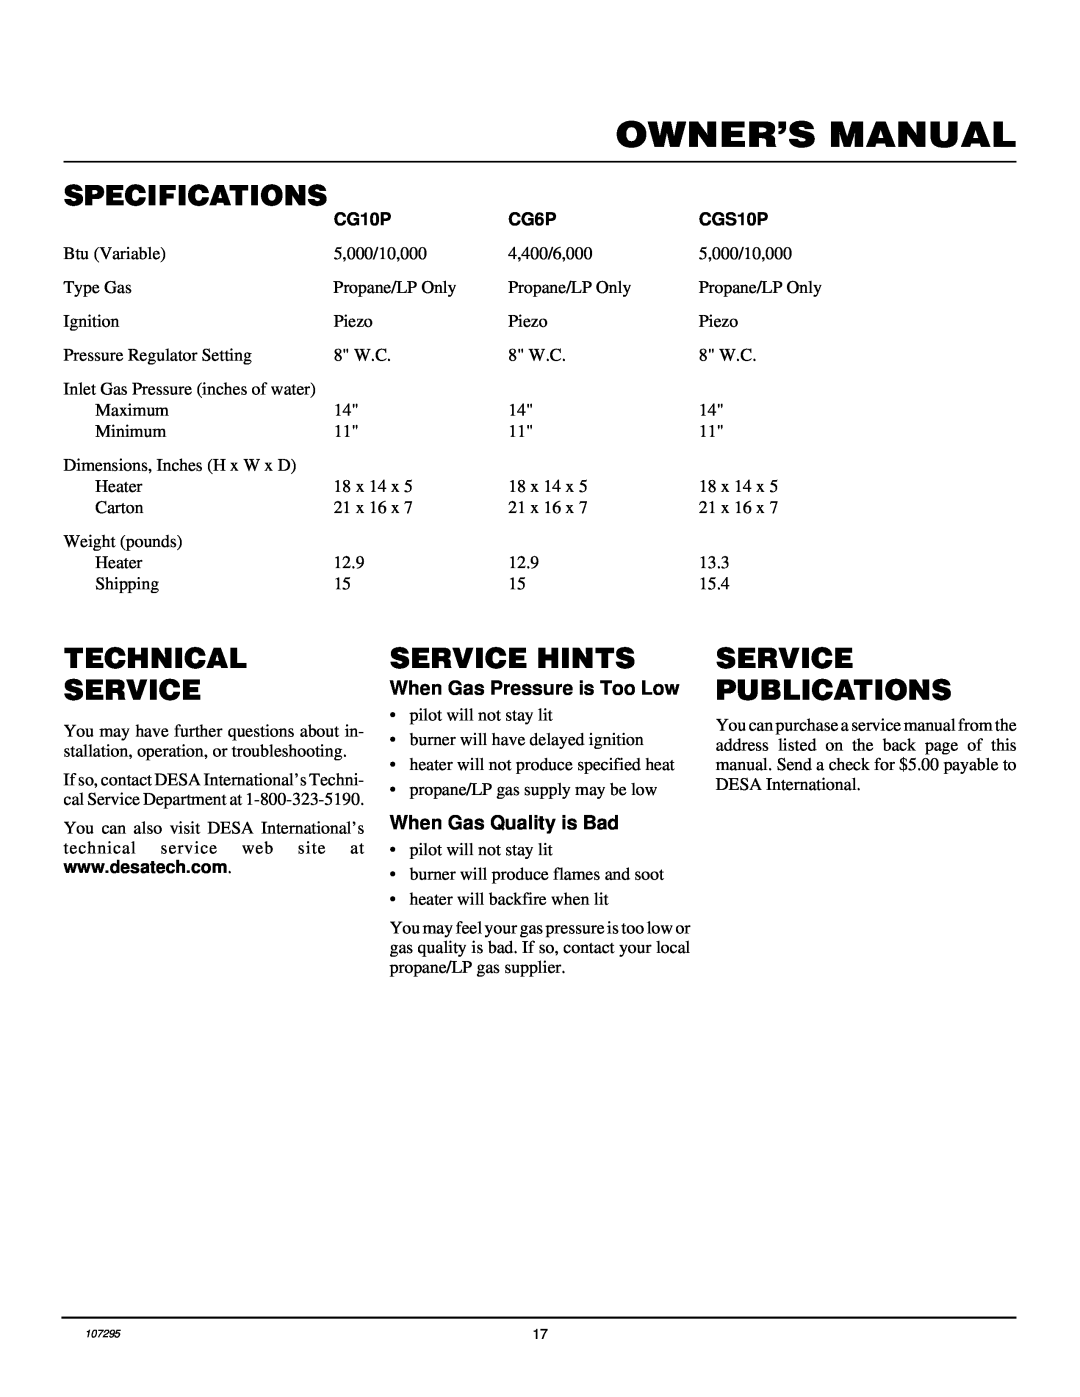 Desa CG10P, CGS10P, CG6P installation manual Specifications, Technical Service, Service Hints, Service Publications 